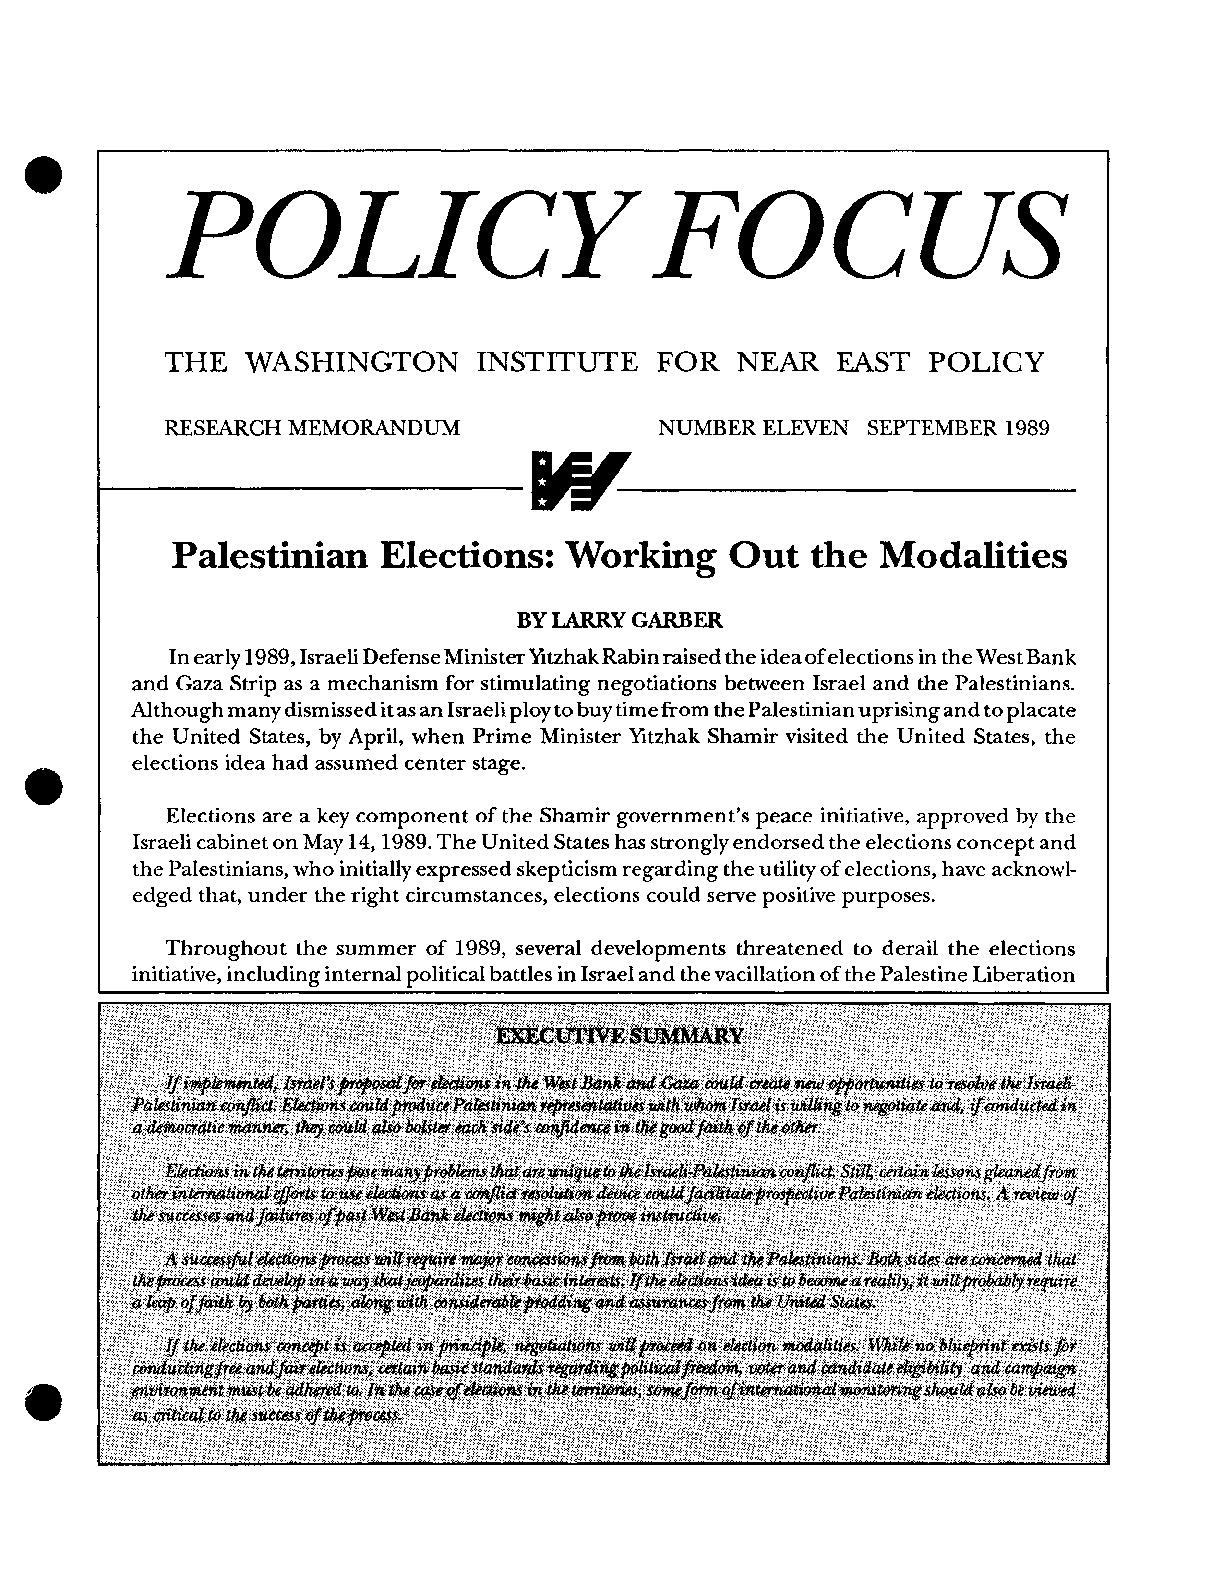 PolicyFocus11.pdf